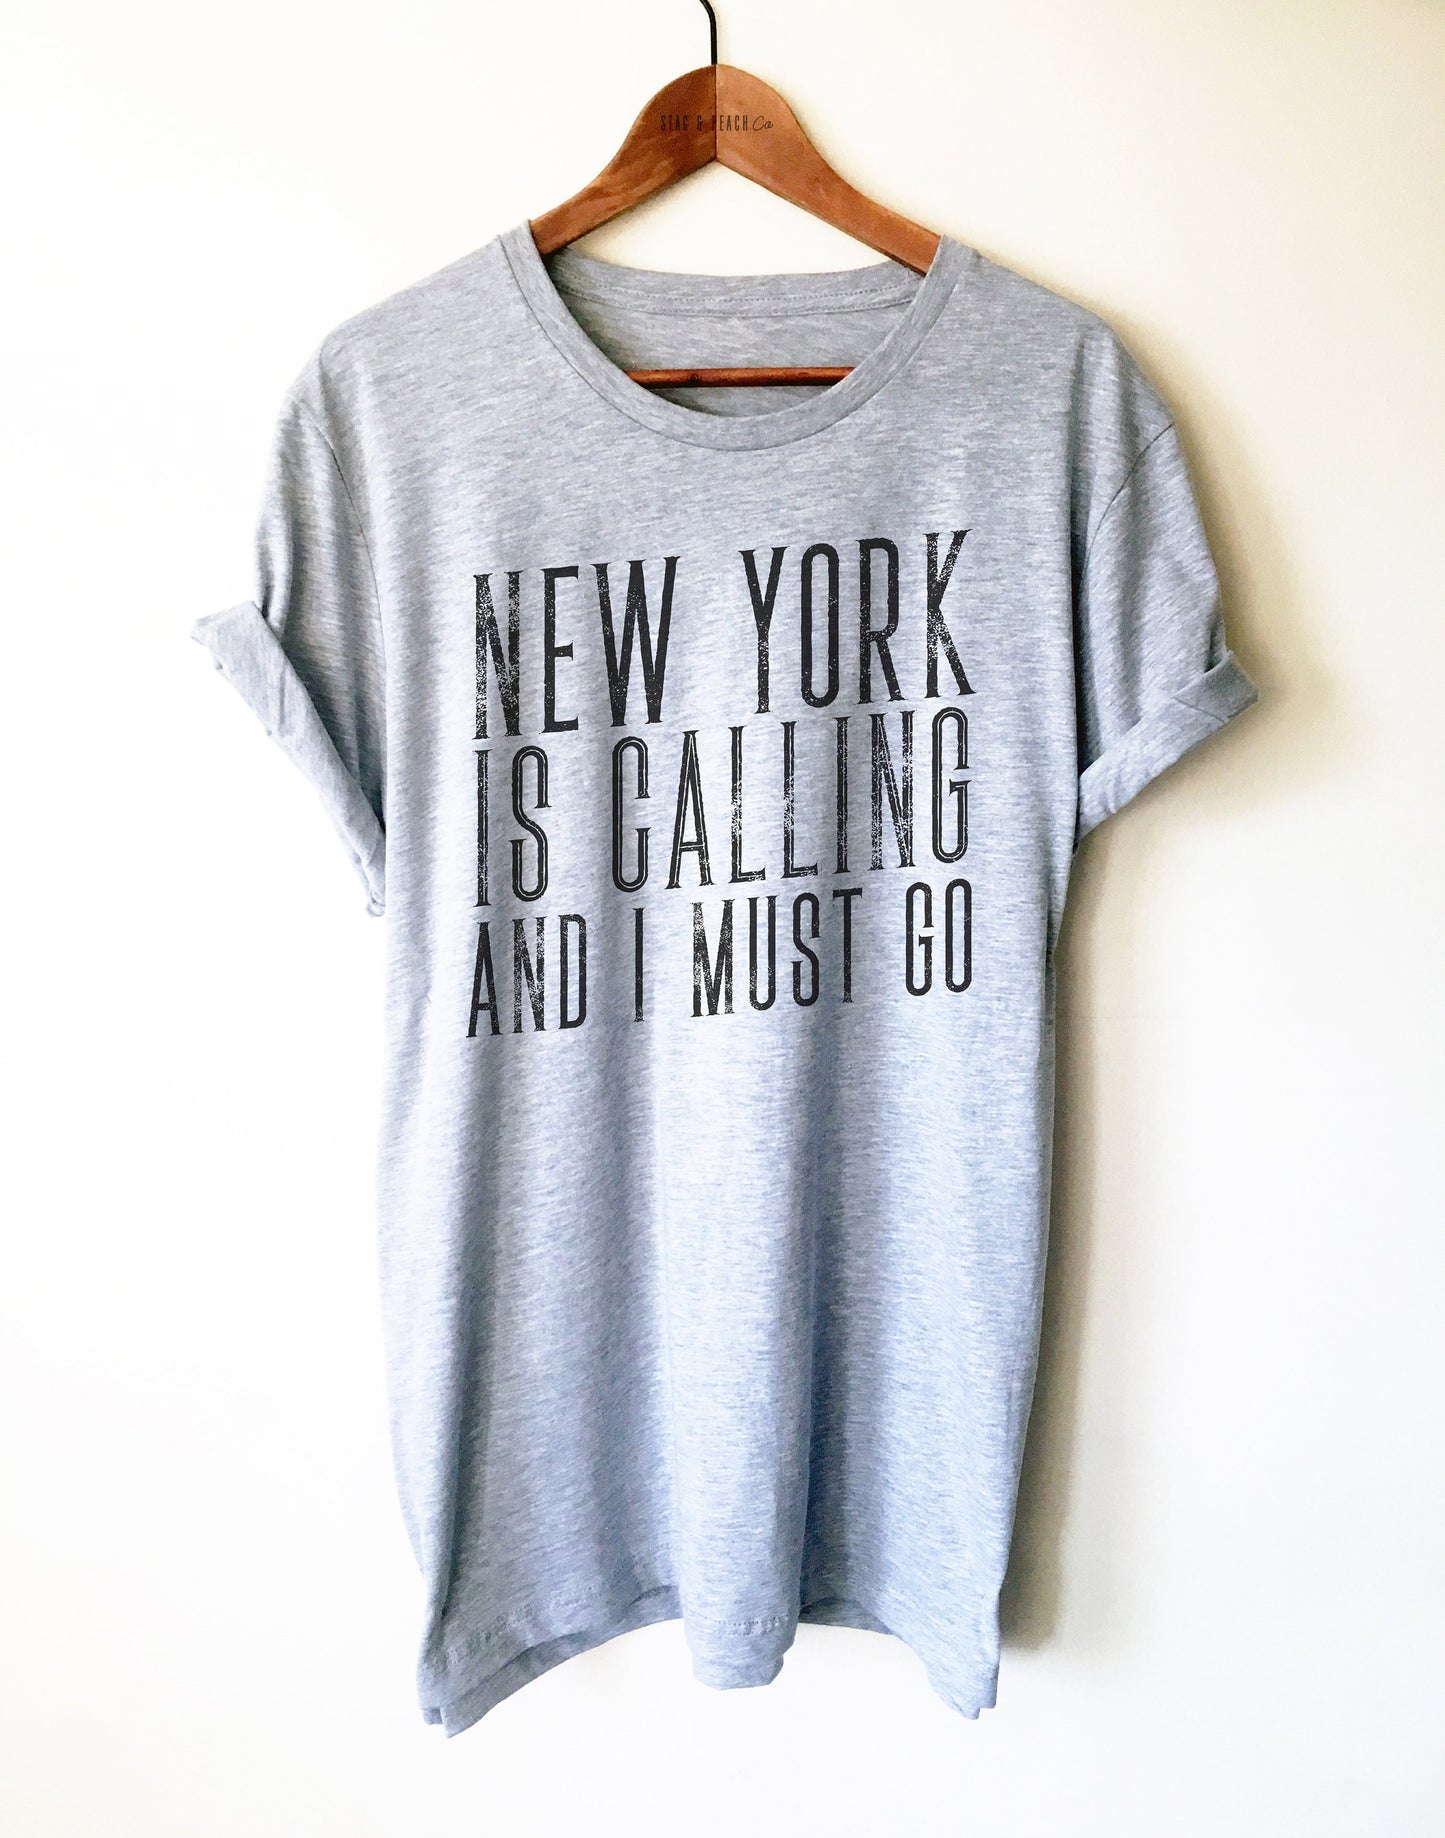 New York Unisex Shirt - New York Is Calling Shirt, NYC Gift, New York State Shirt, I Love New York, Long Island Shirt, Moving Gift, NY Shirt